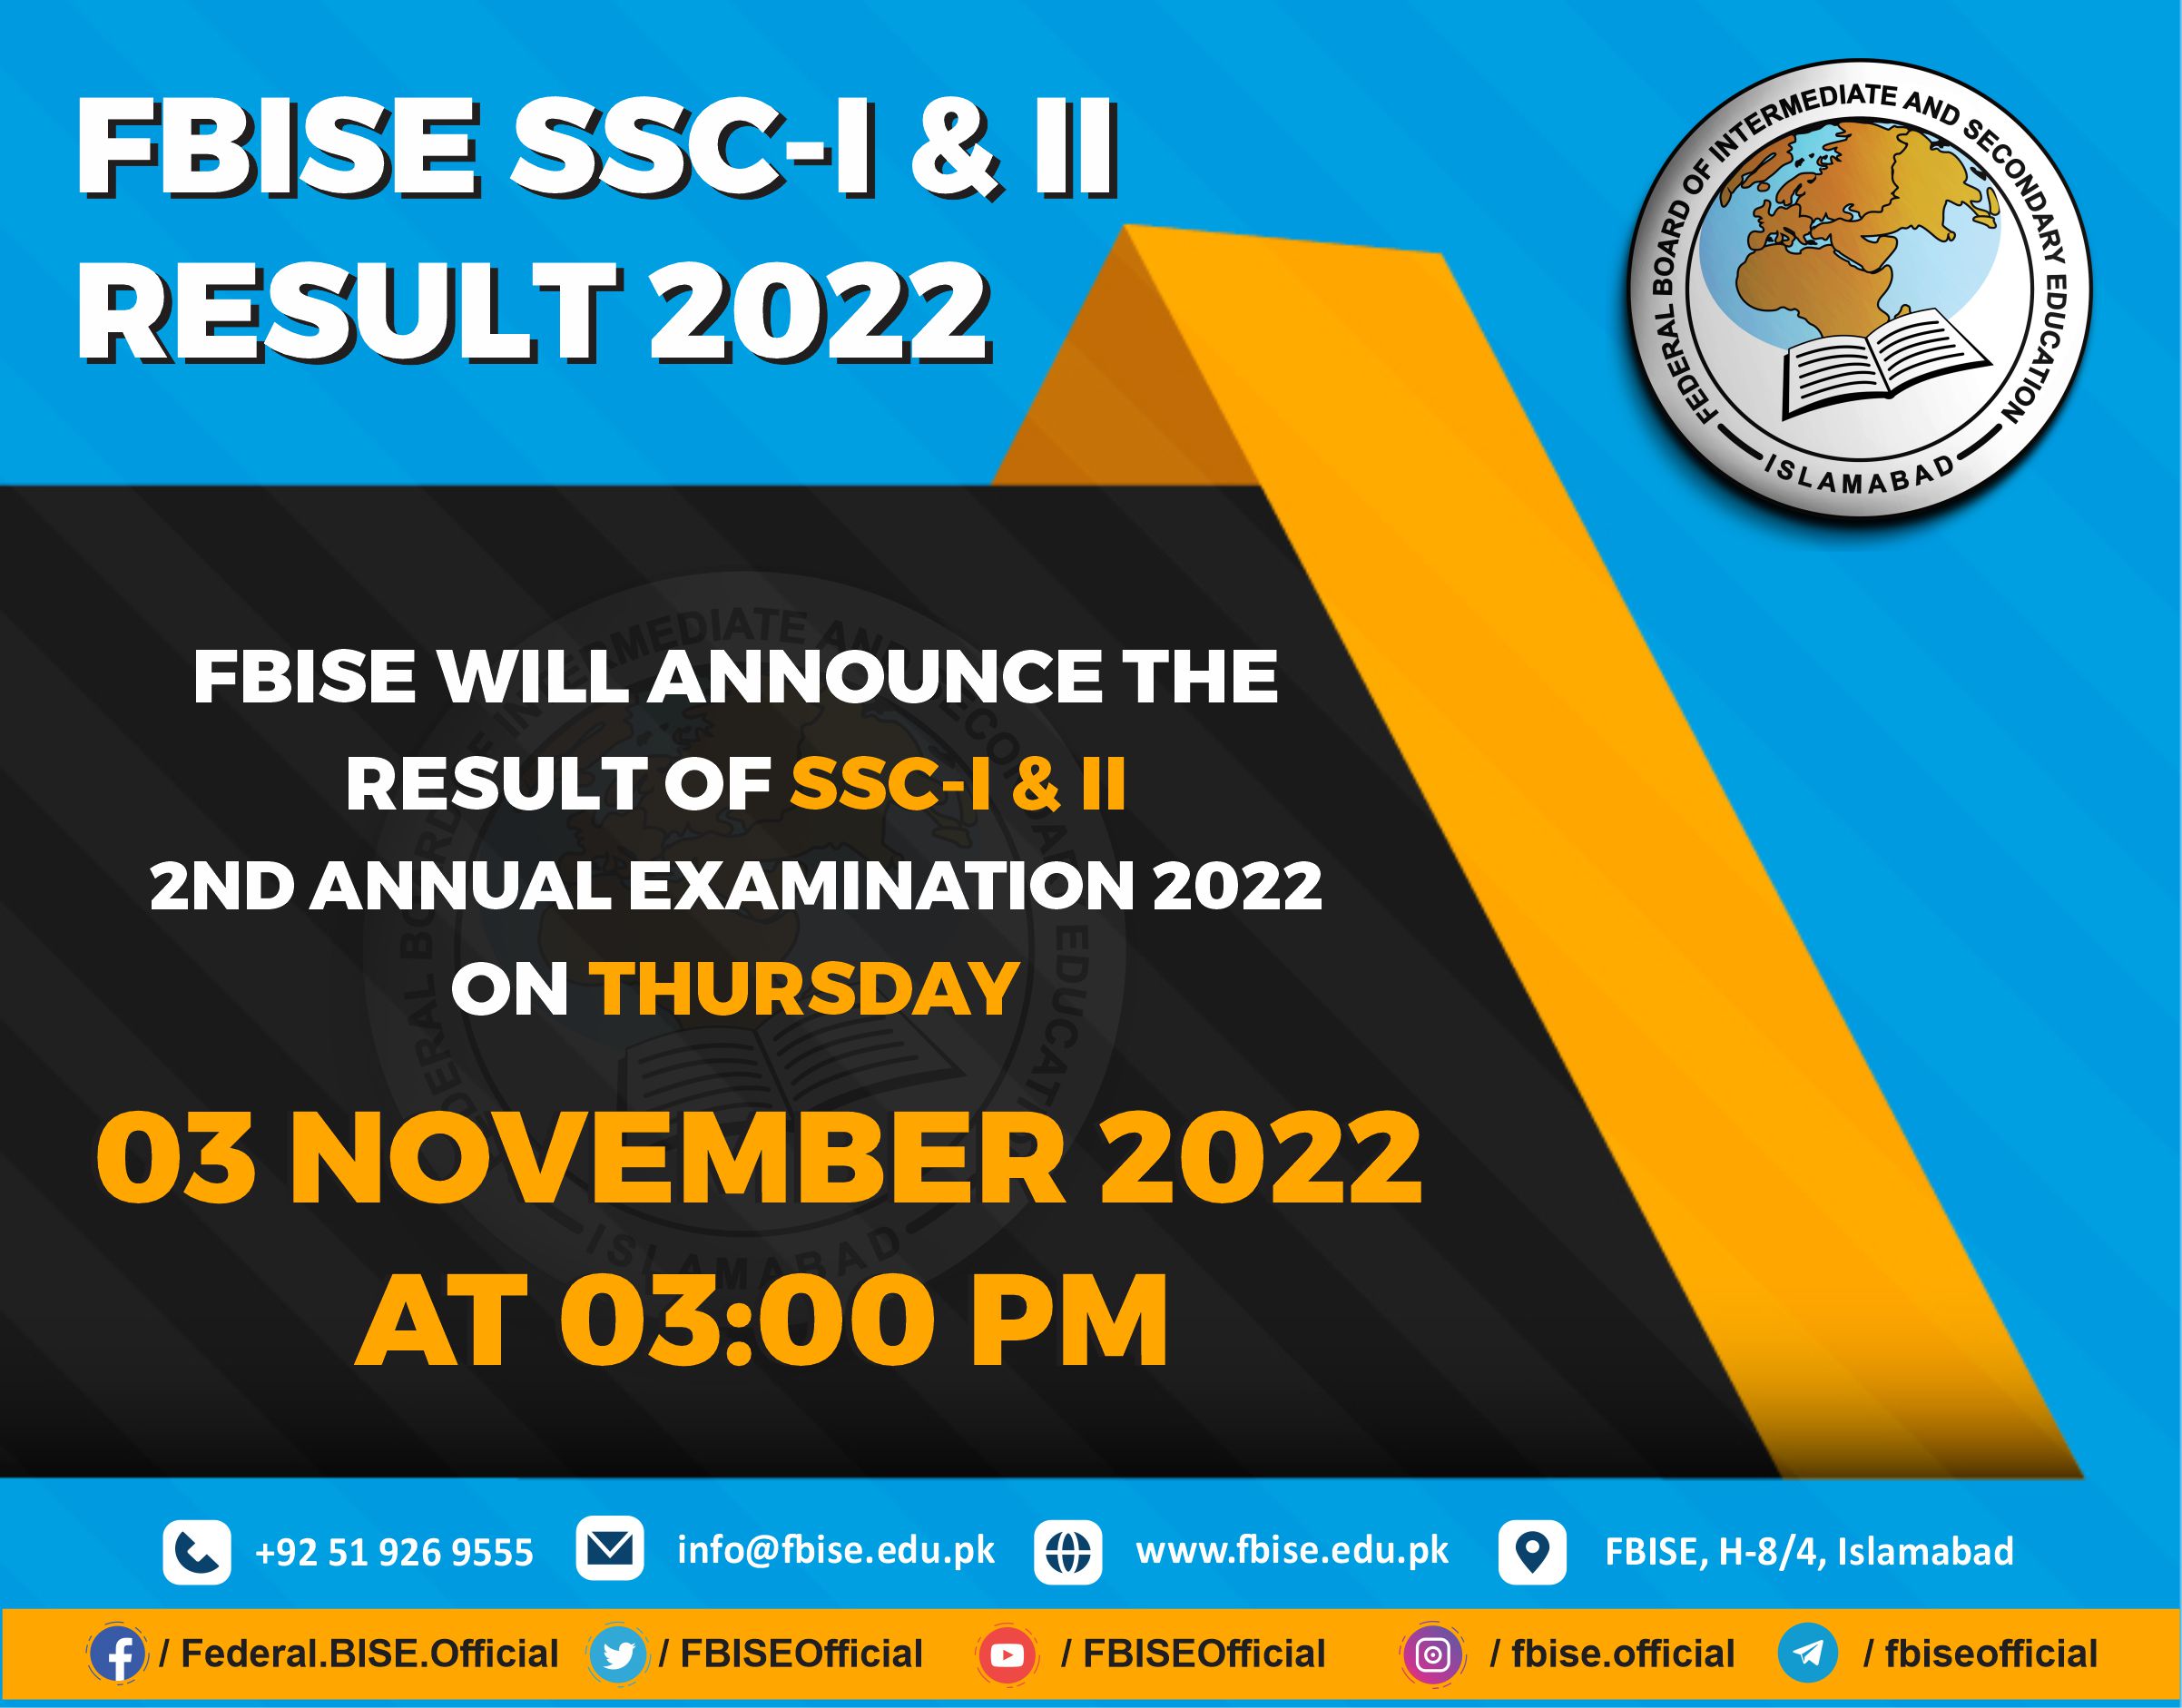 FBISE SSC-I & II RESULT 2022